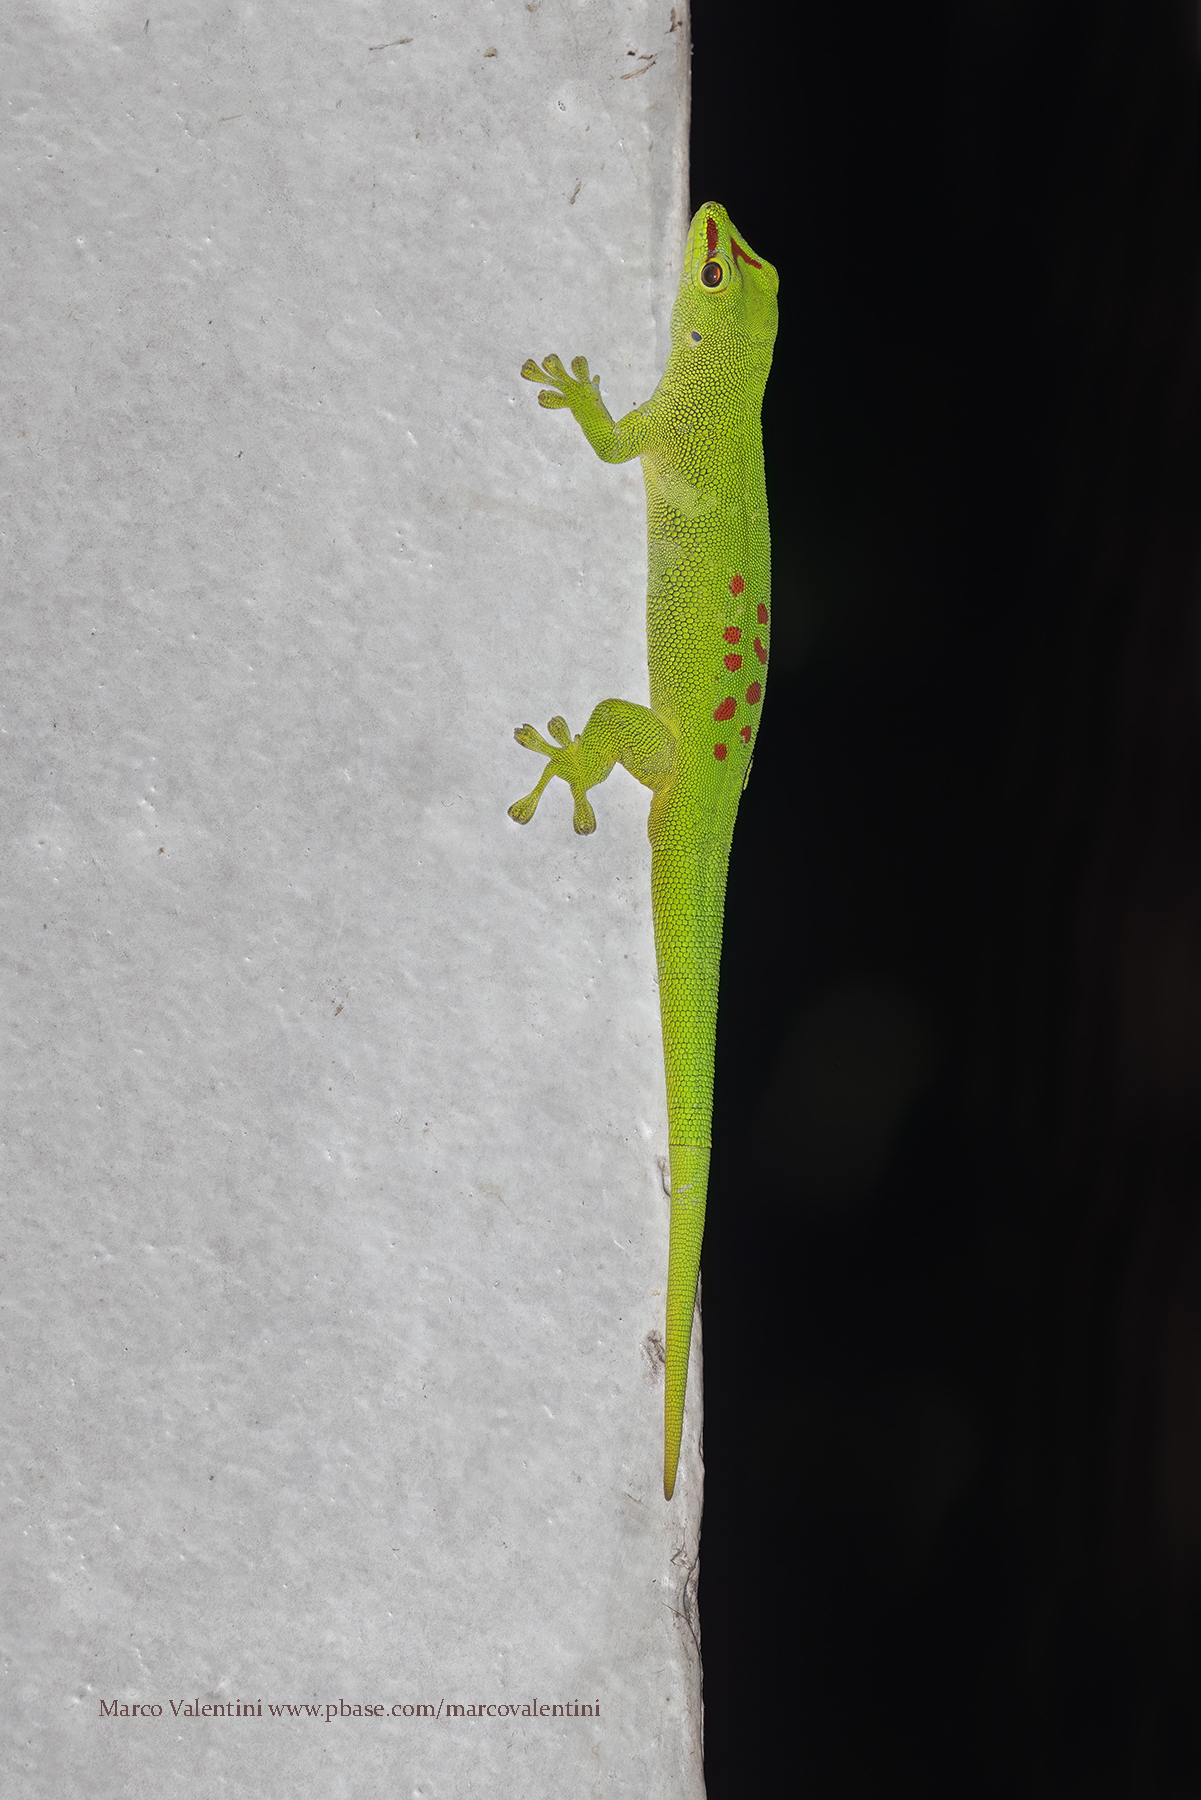 Madagascar Day Gecko - Phelsuma madagascariensis